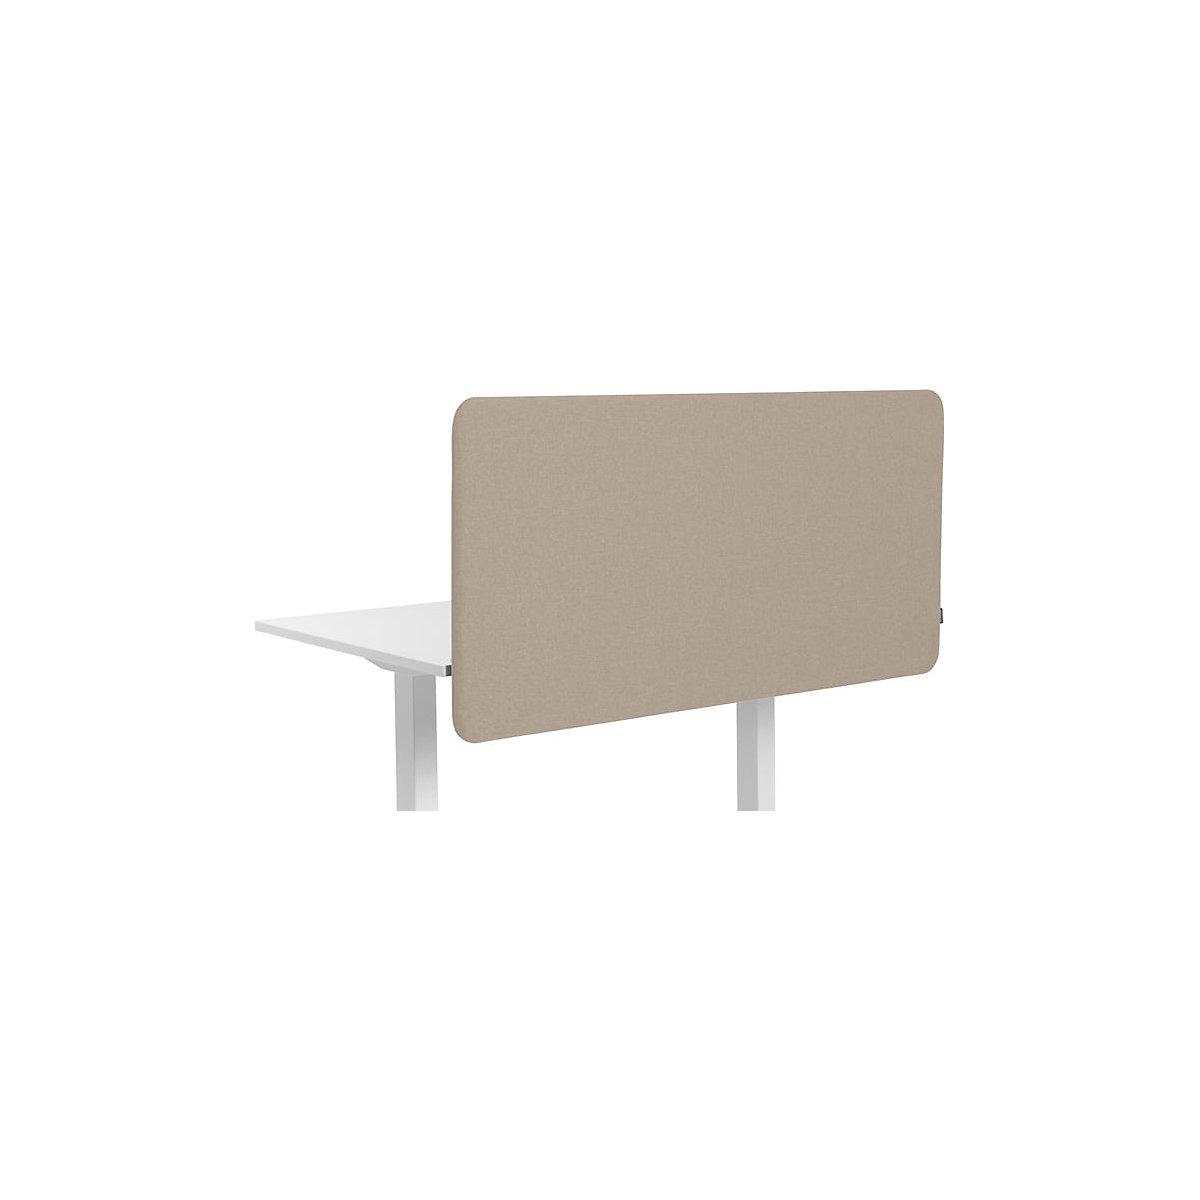 Softline Salsa acoustic desk partition, suspended downwards, HxW 650 x 800 mm, fabric, beige-2